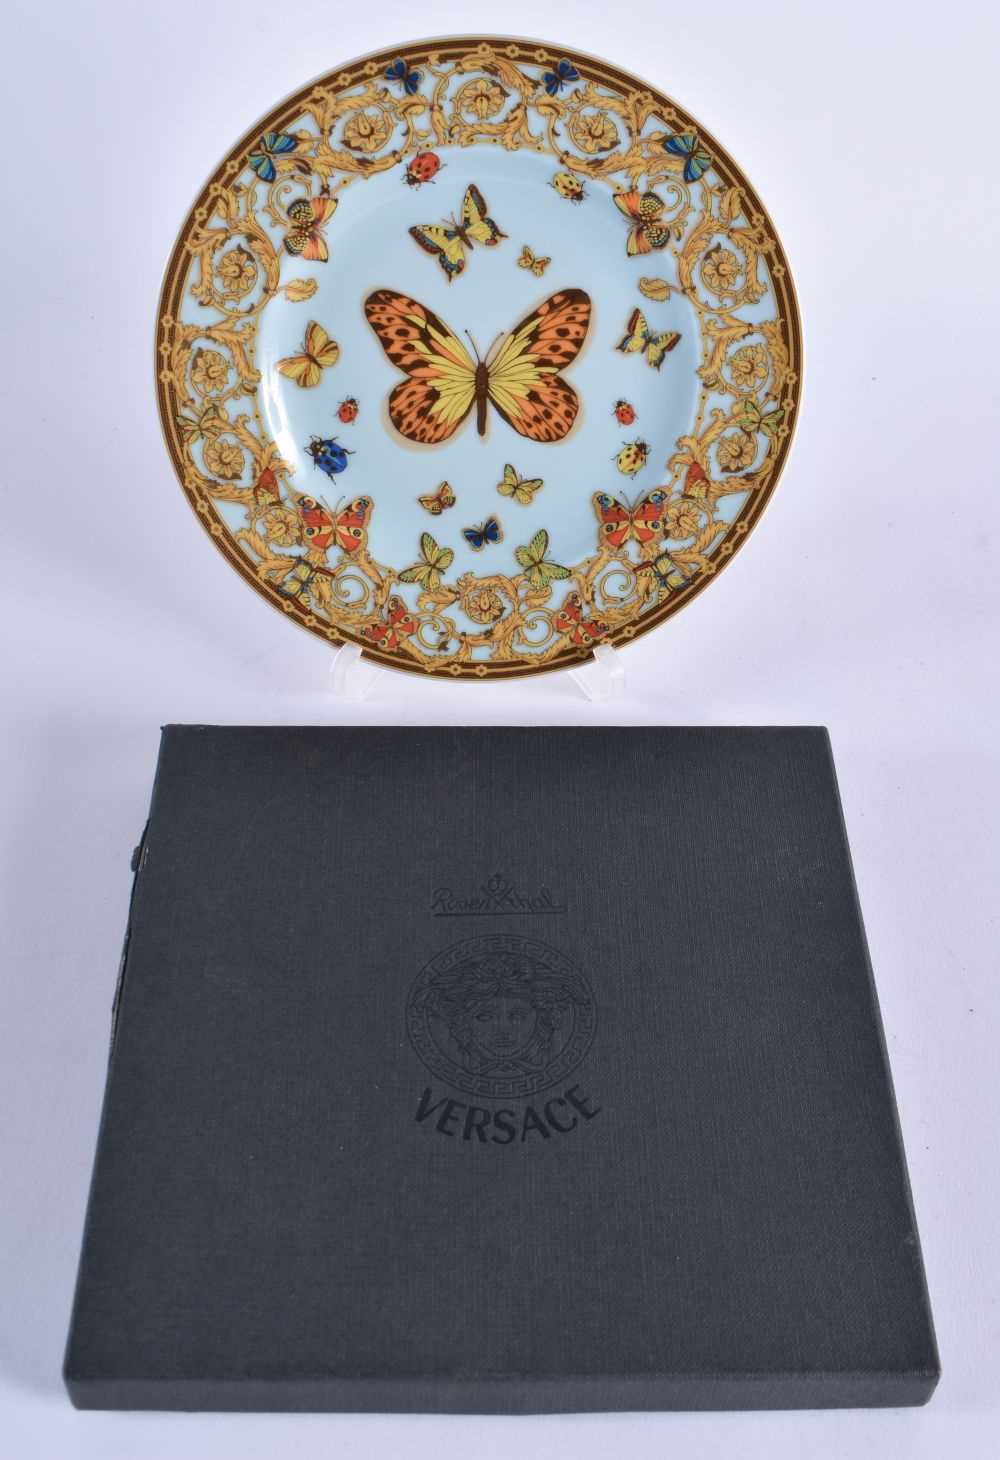 Versace Le Jardin Plate in Original Box w/ Certificate. 8.5 cm diameter.